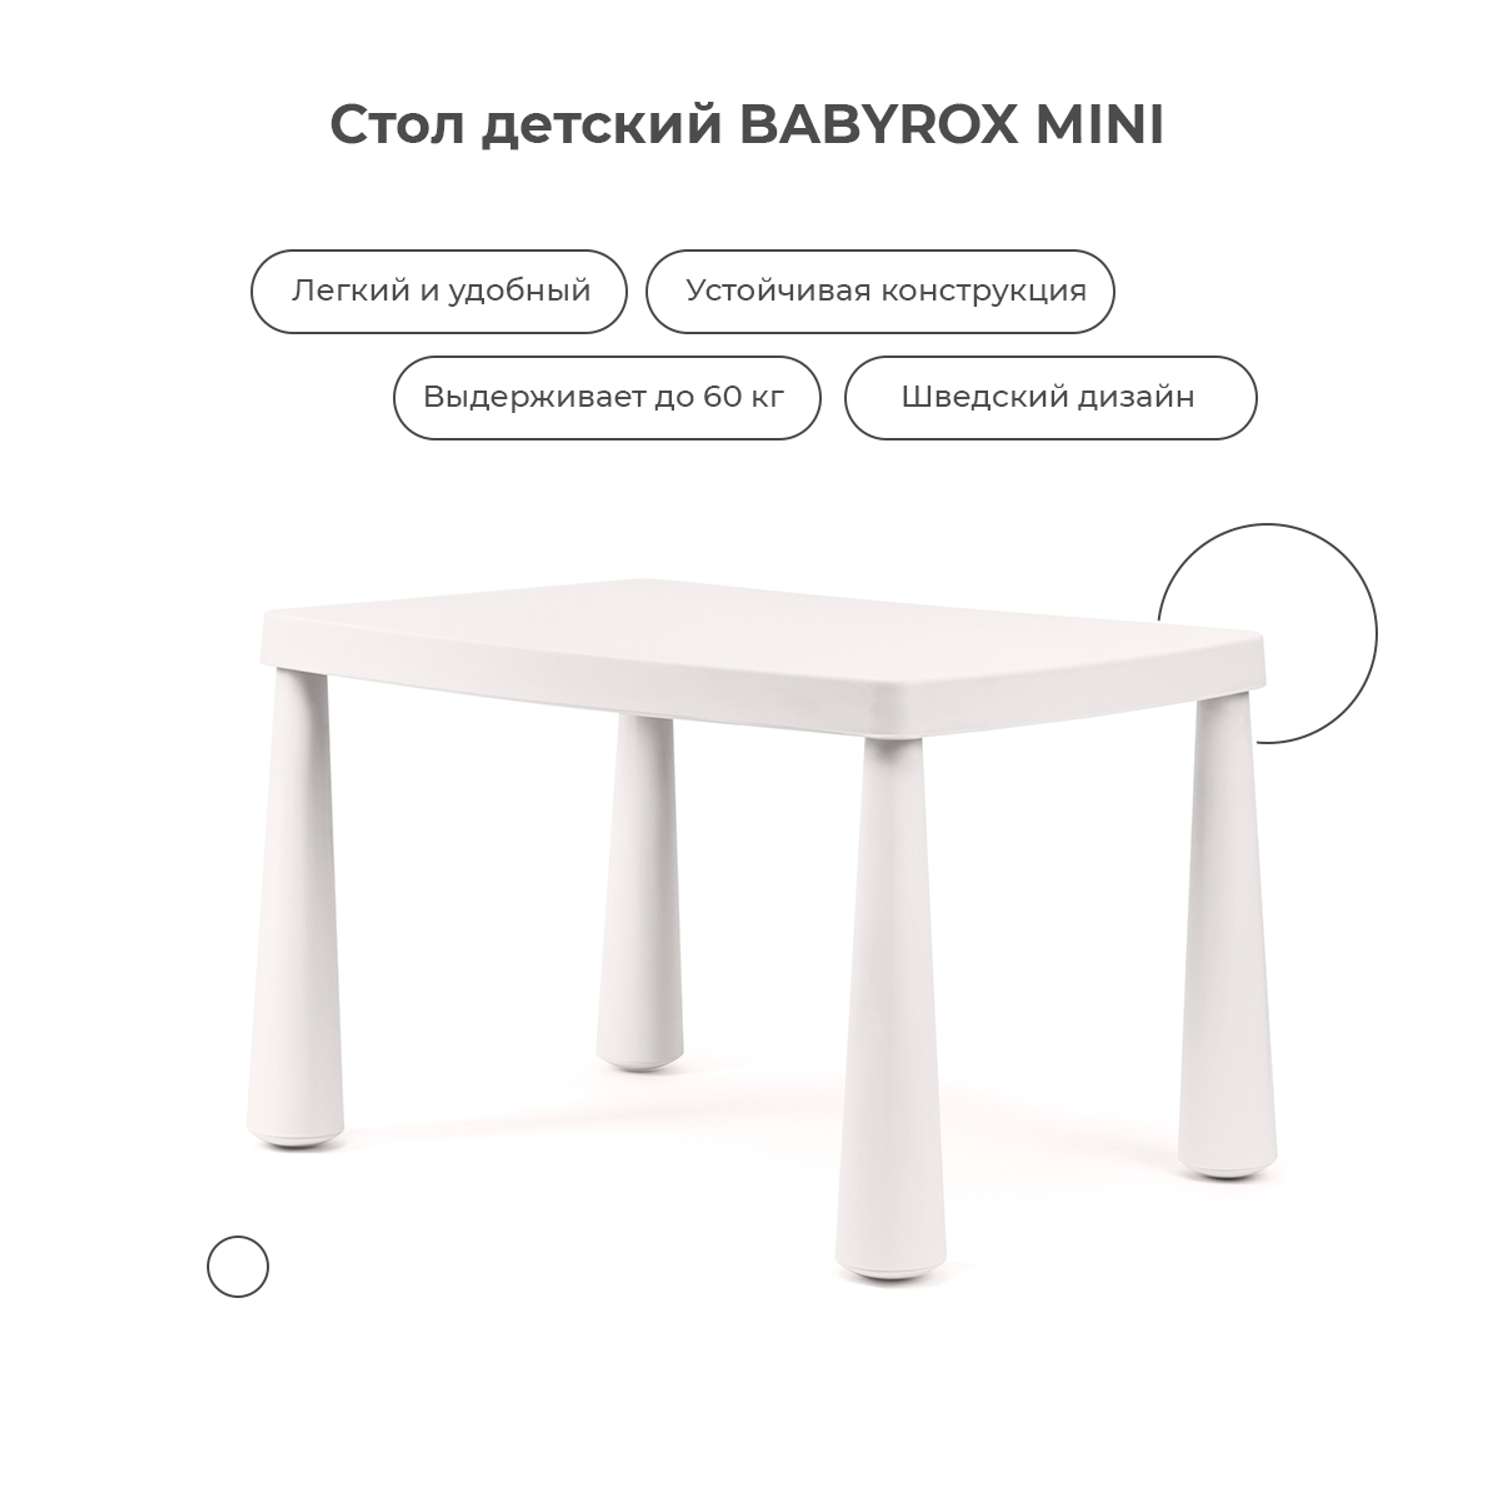 Стол детский BabyRox MINI - фото 4